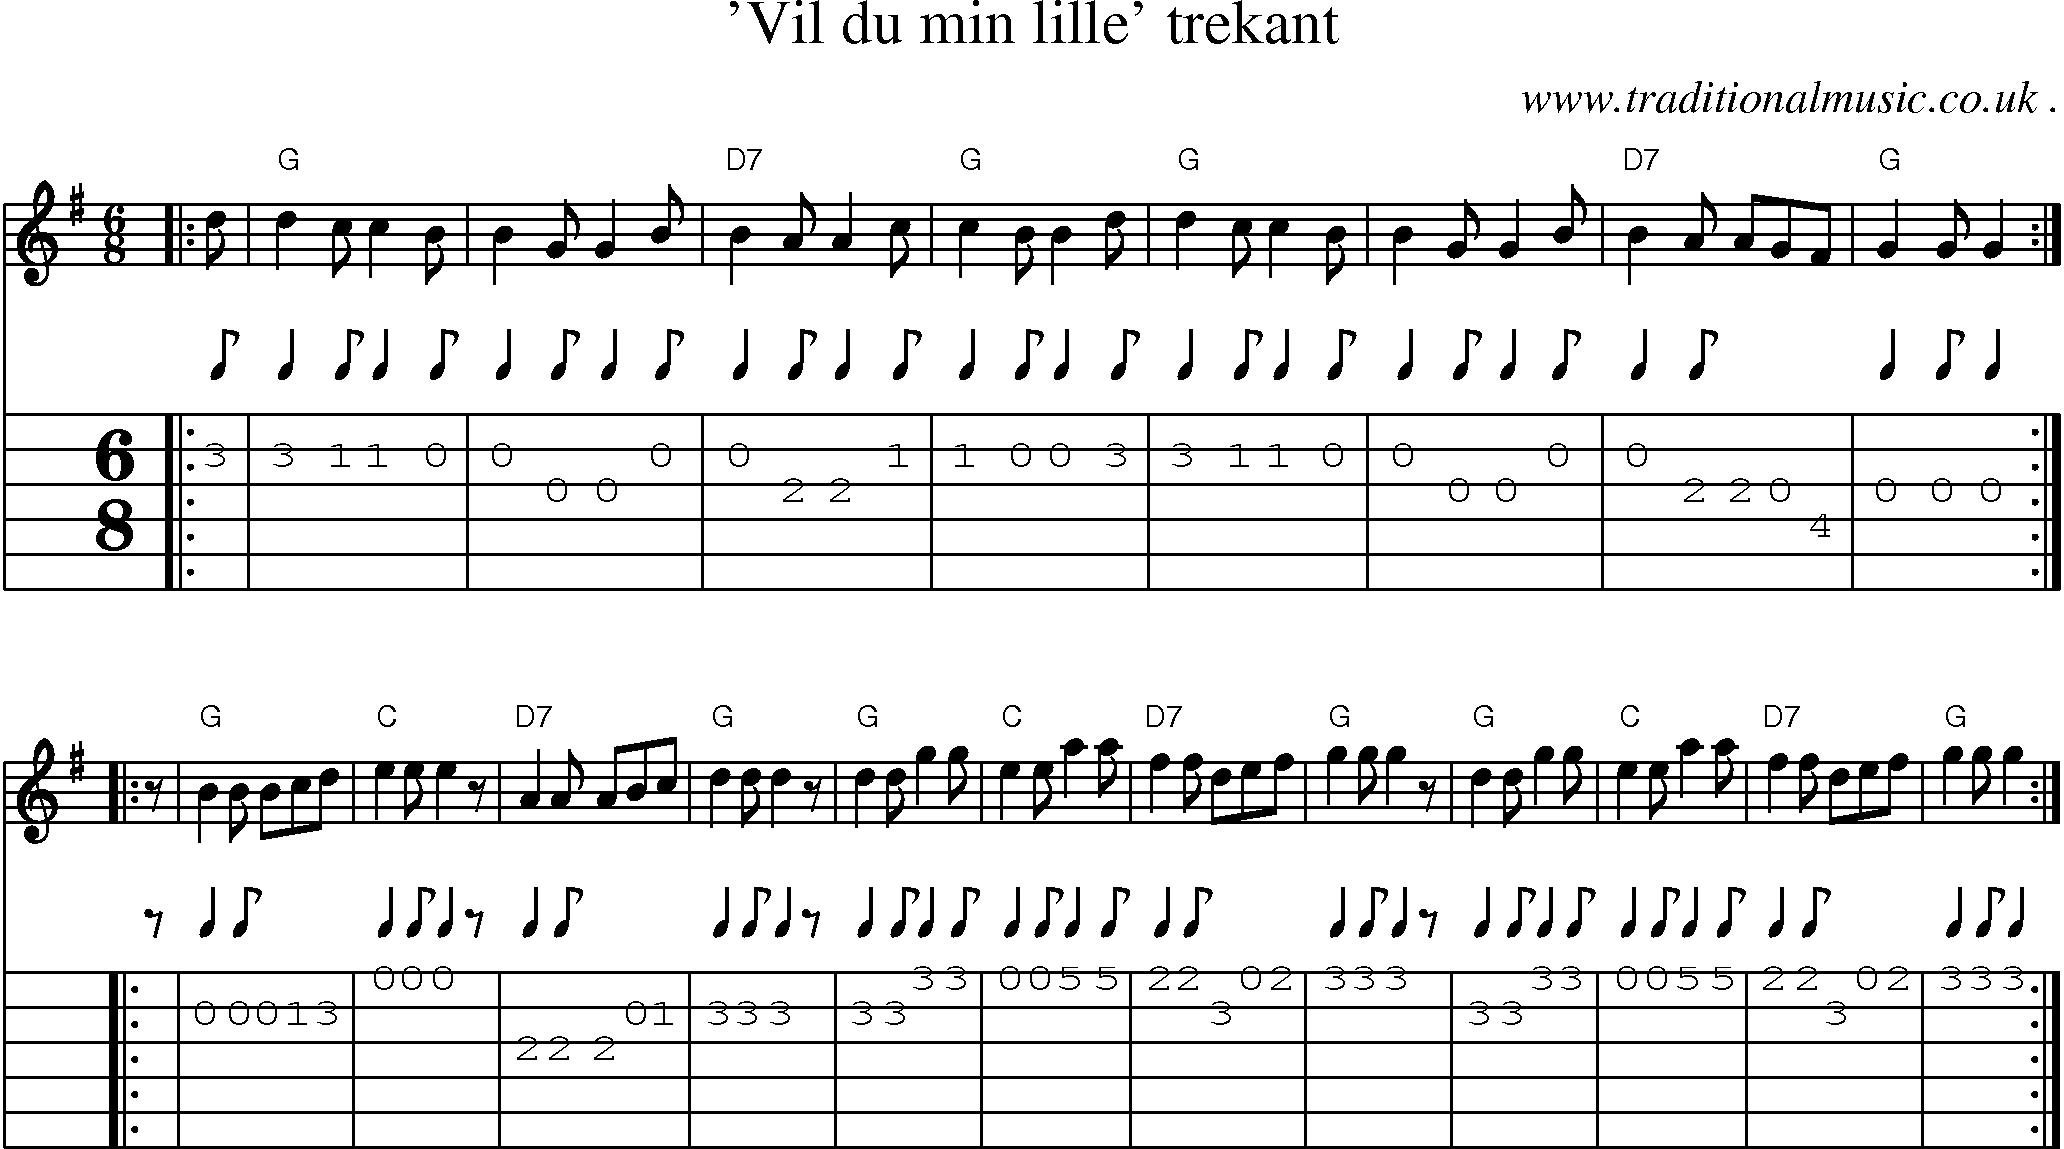 Sheet-music  score, Chords and Guitar Tabs for Vil Du Min Lille Trekant